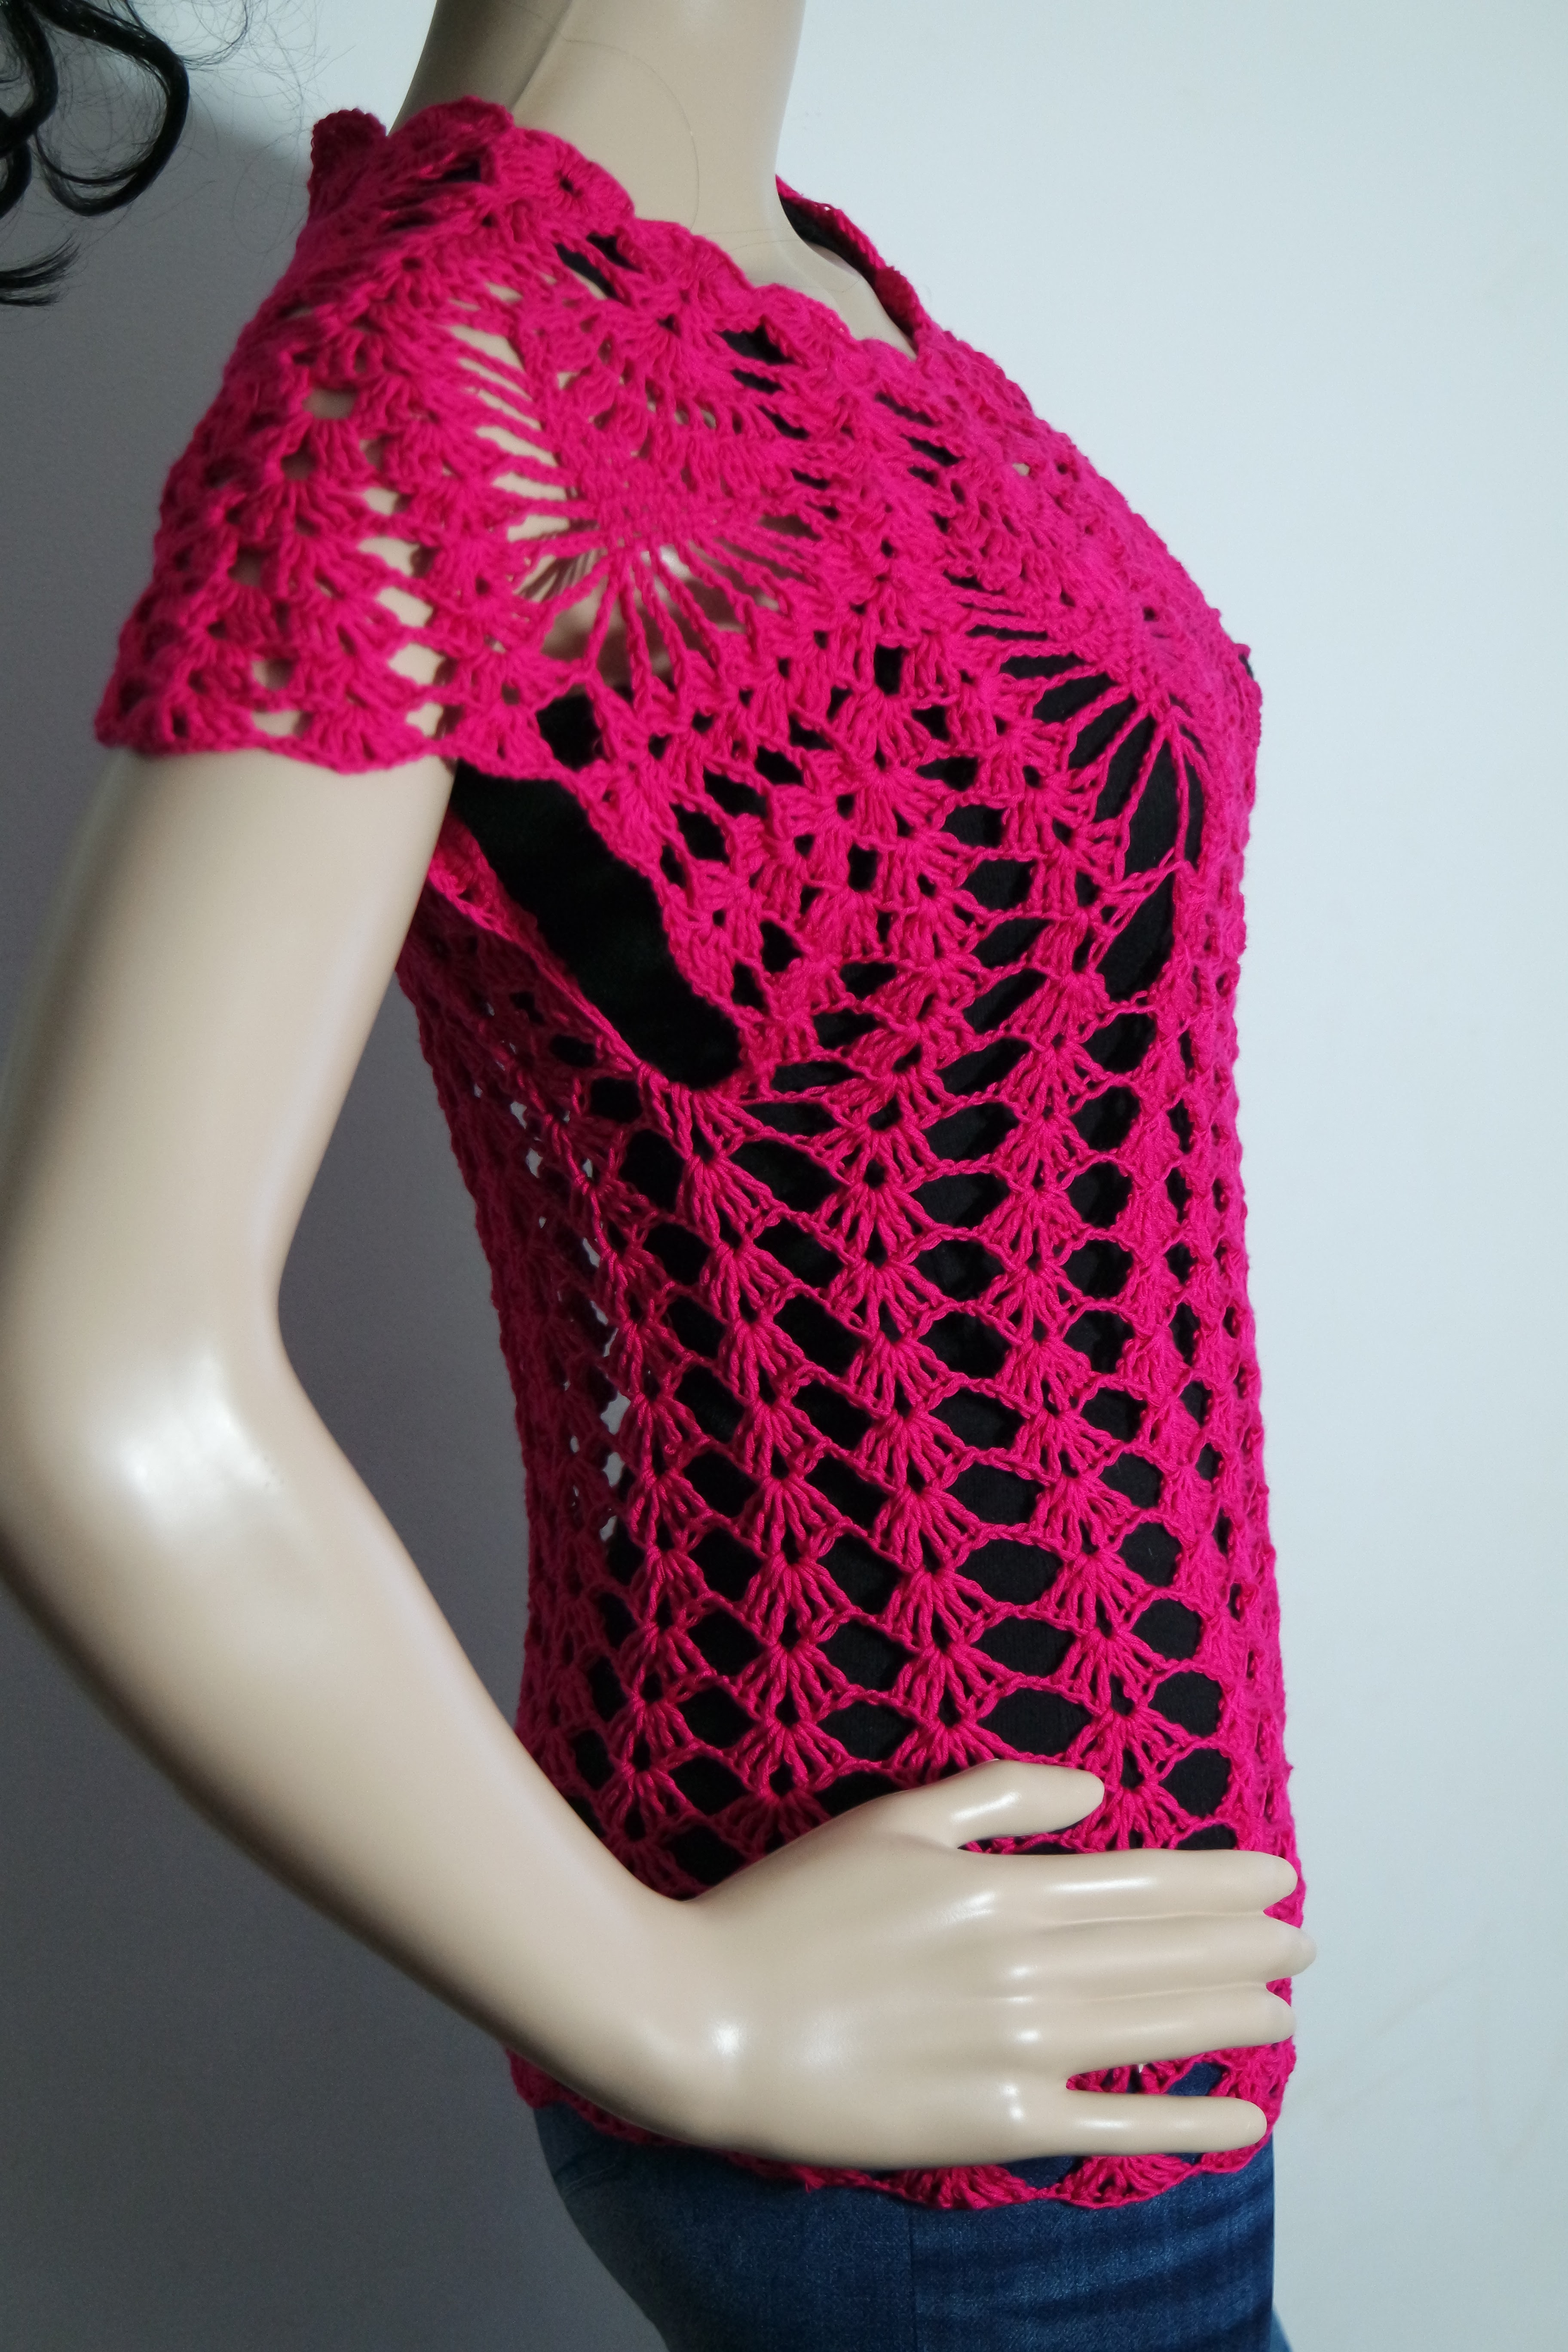 Crochet pattern “pineapple red blouse top” by marifu6a